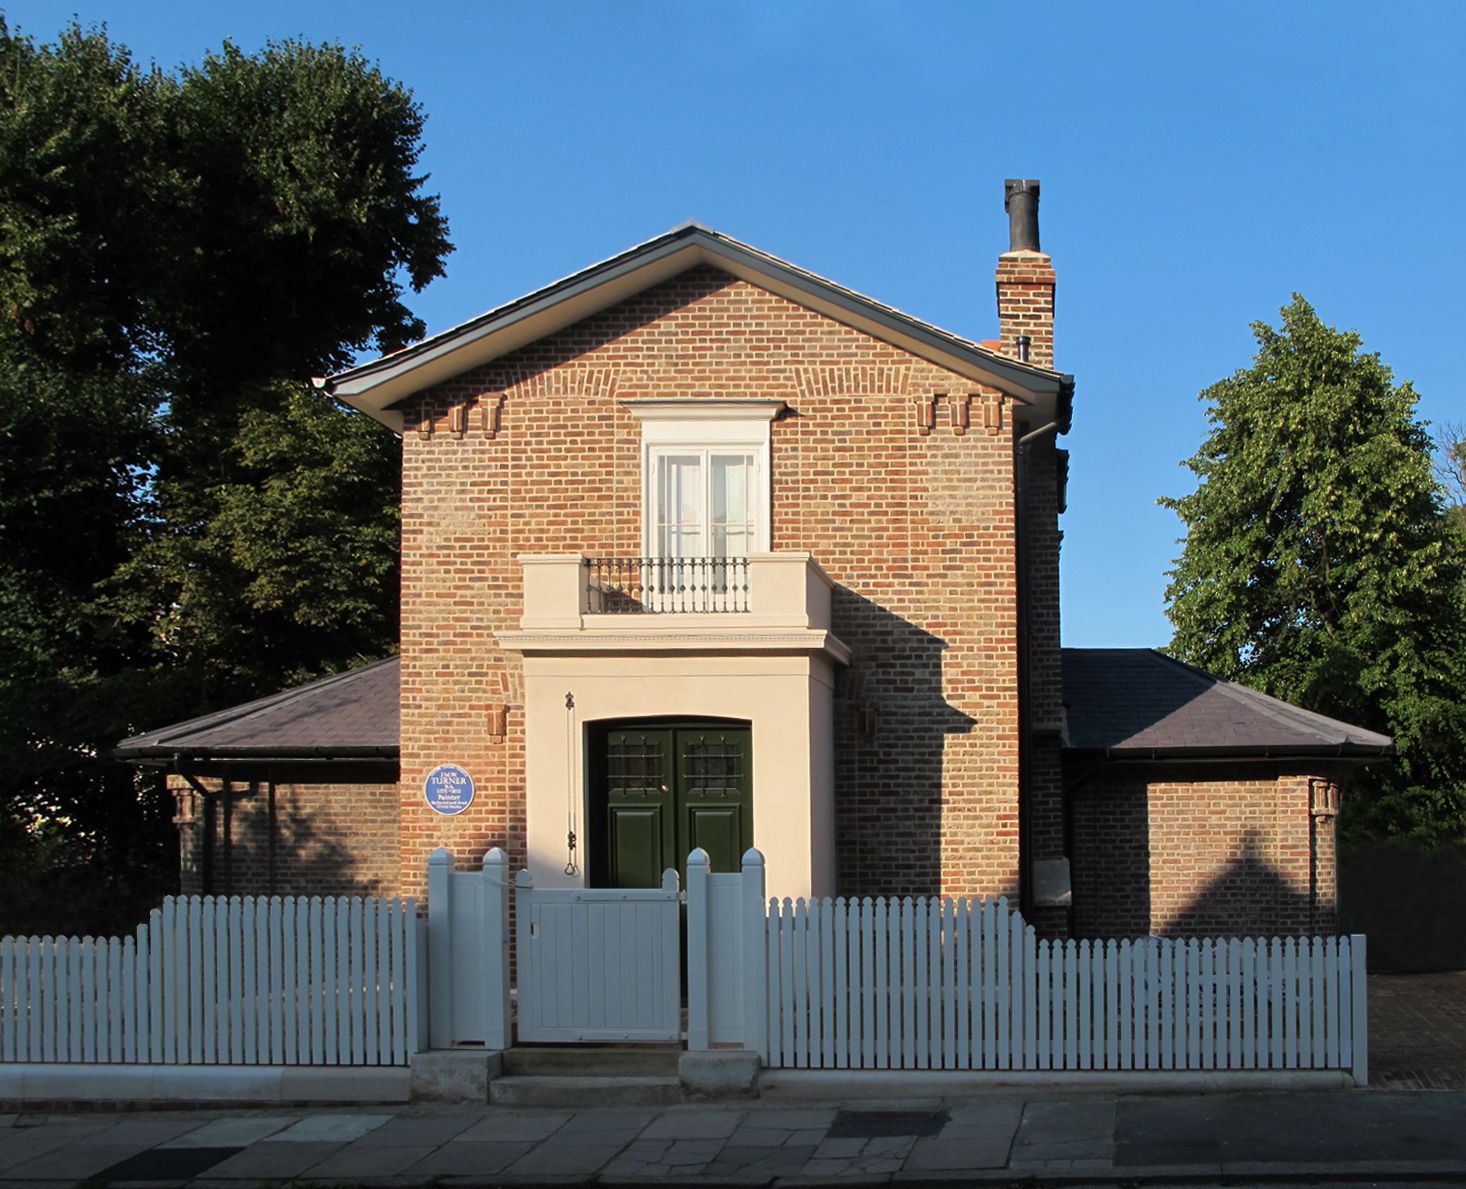 Sandycombe Lodge, résidence de campagne du peintre Turner